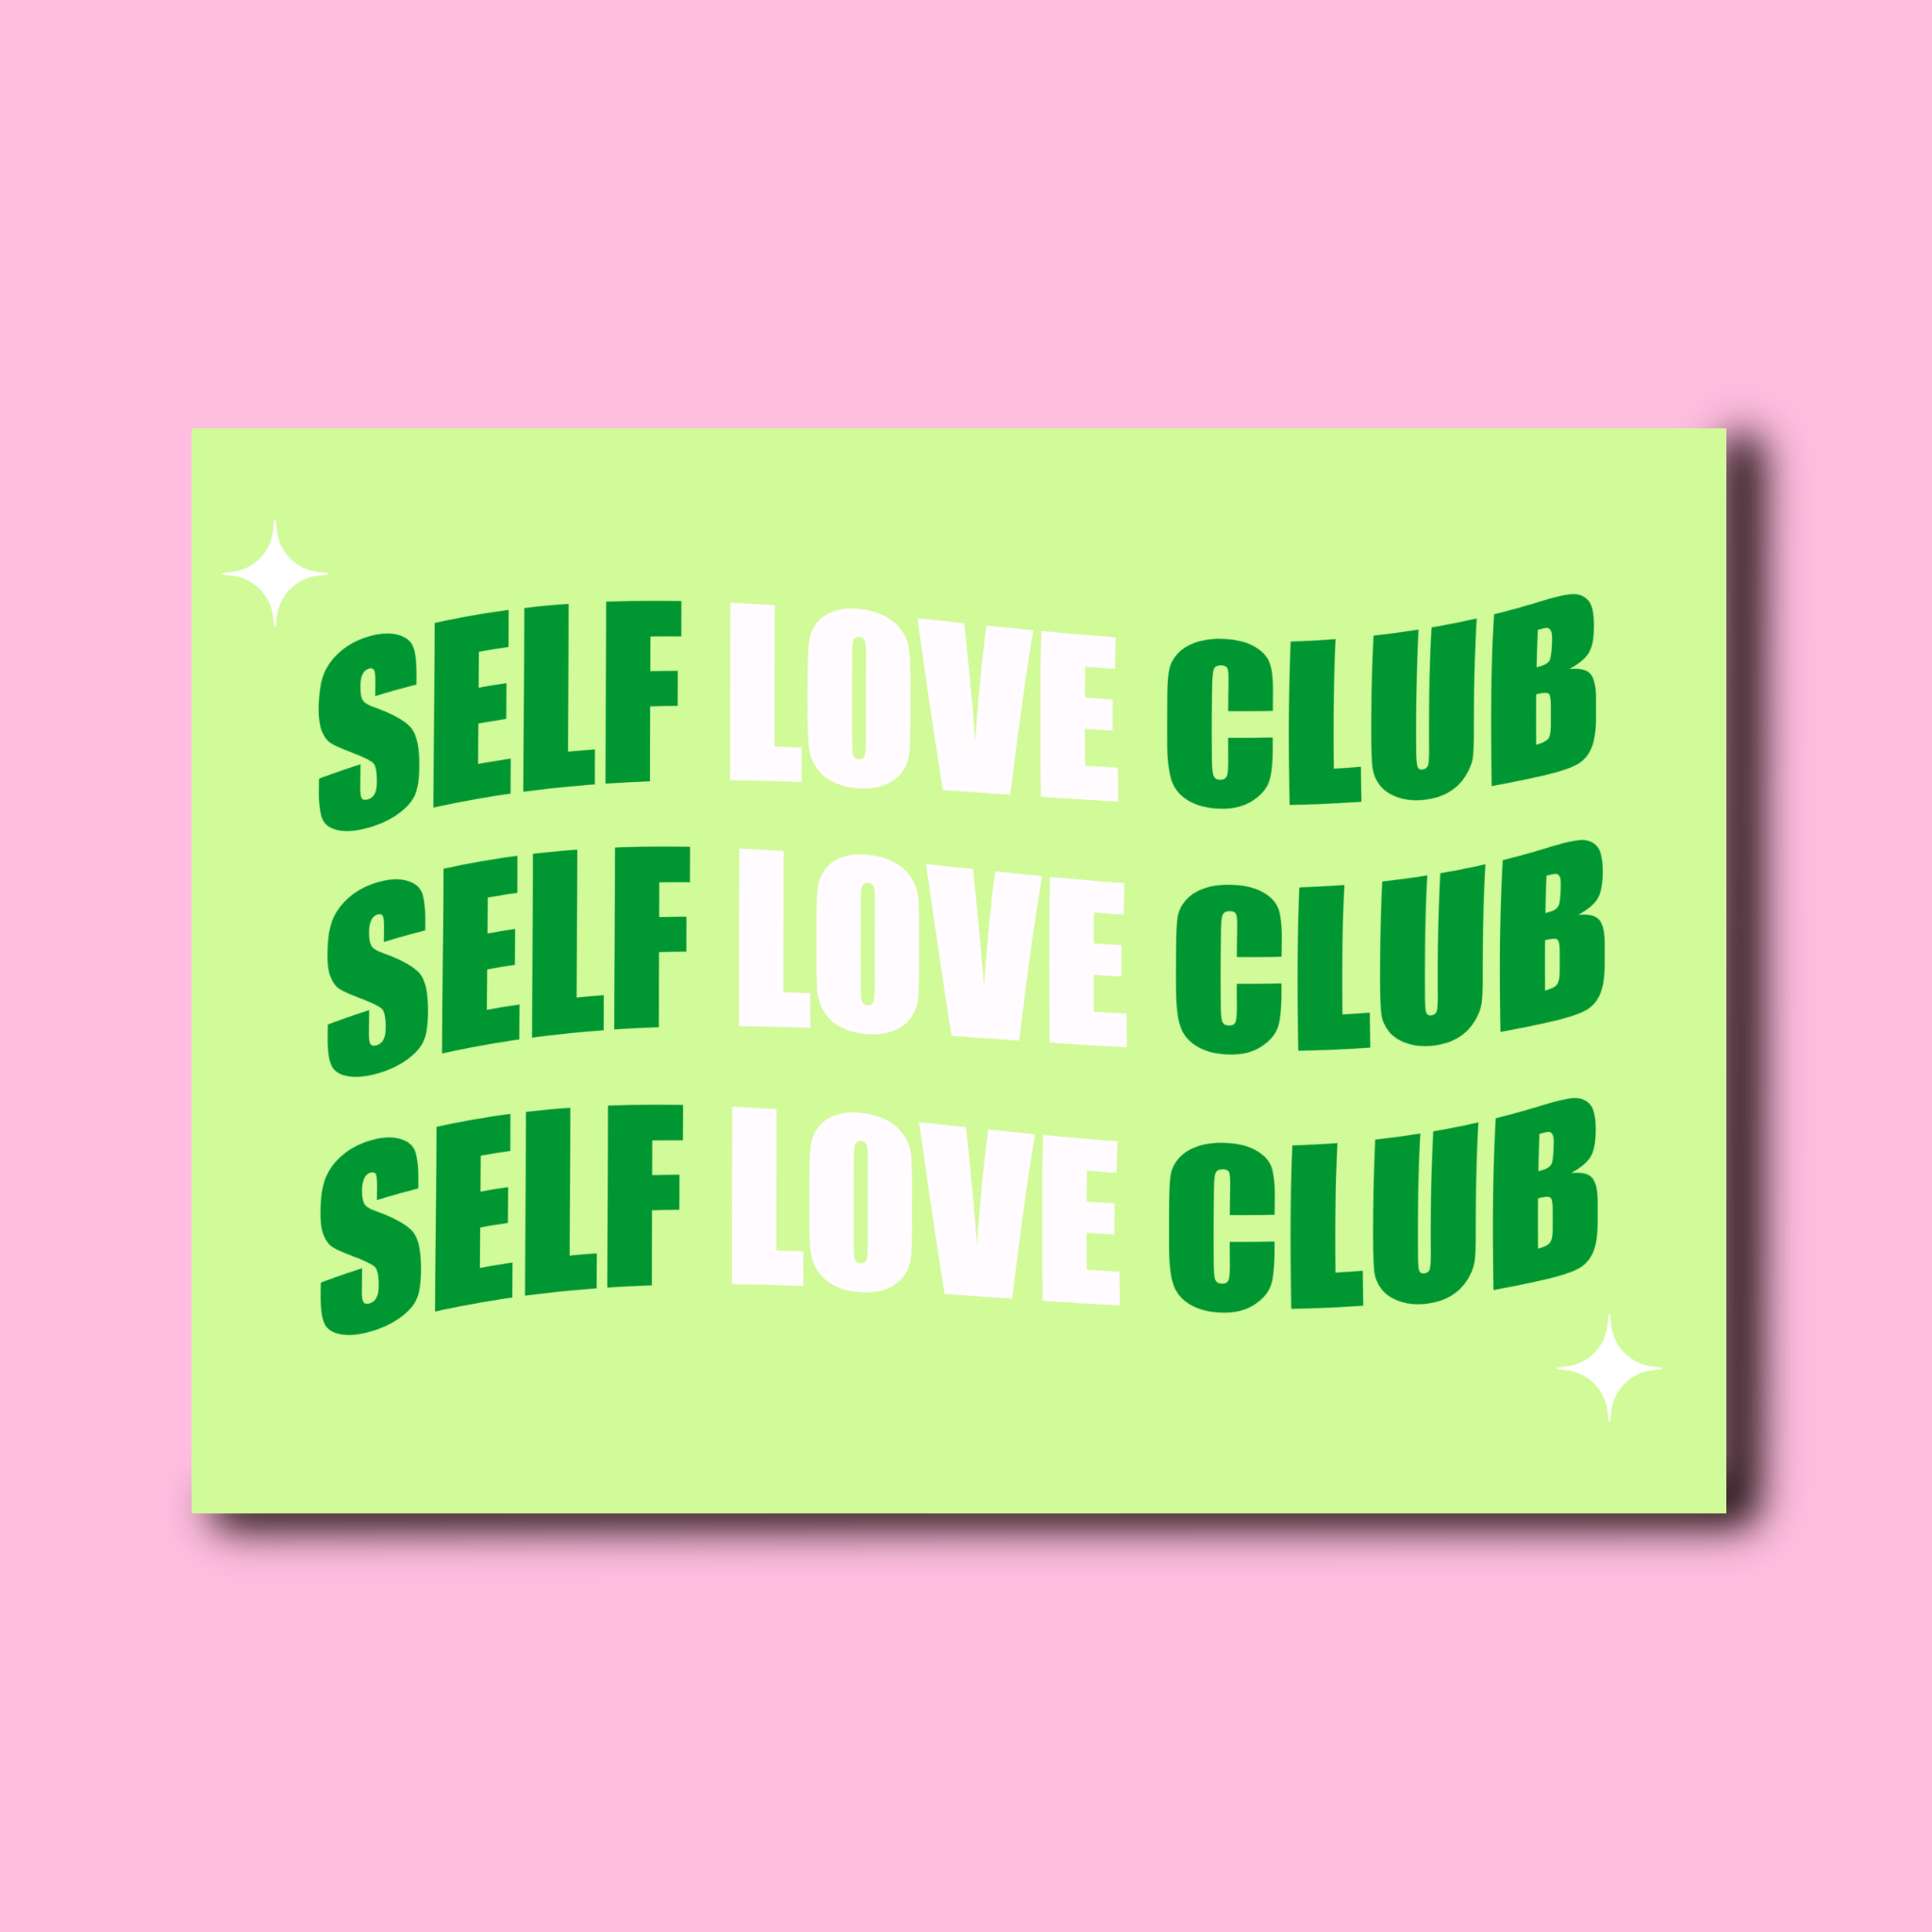 Self love club (colour variations)